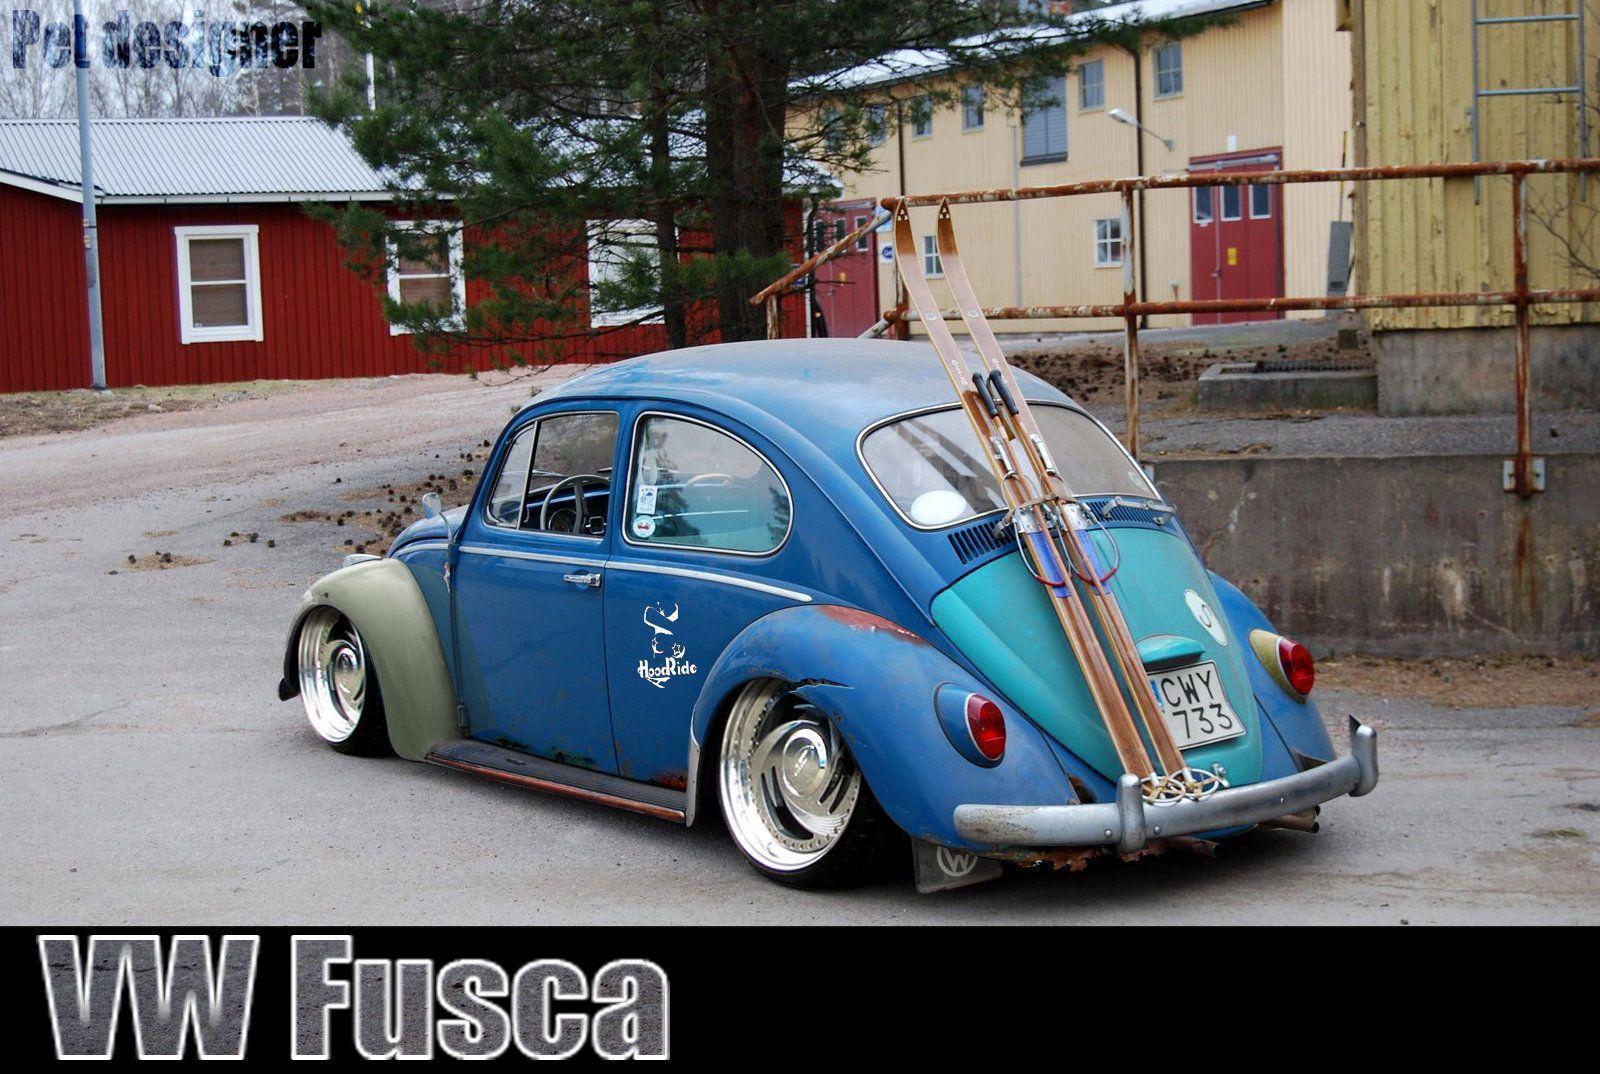 VW Fusca HoodRide by petdesigner